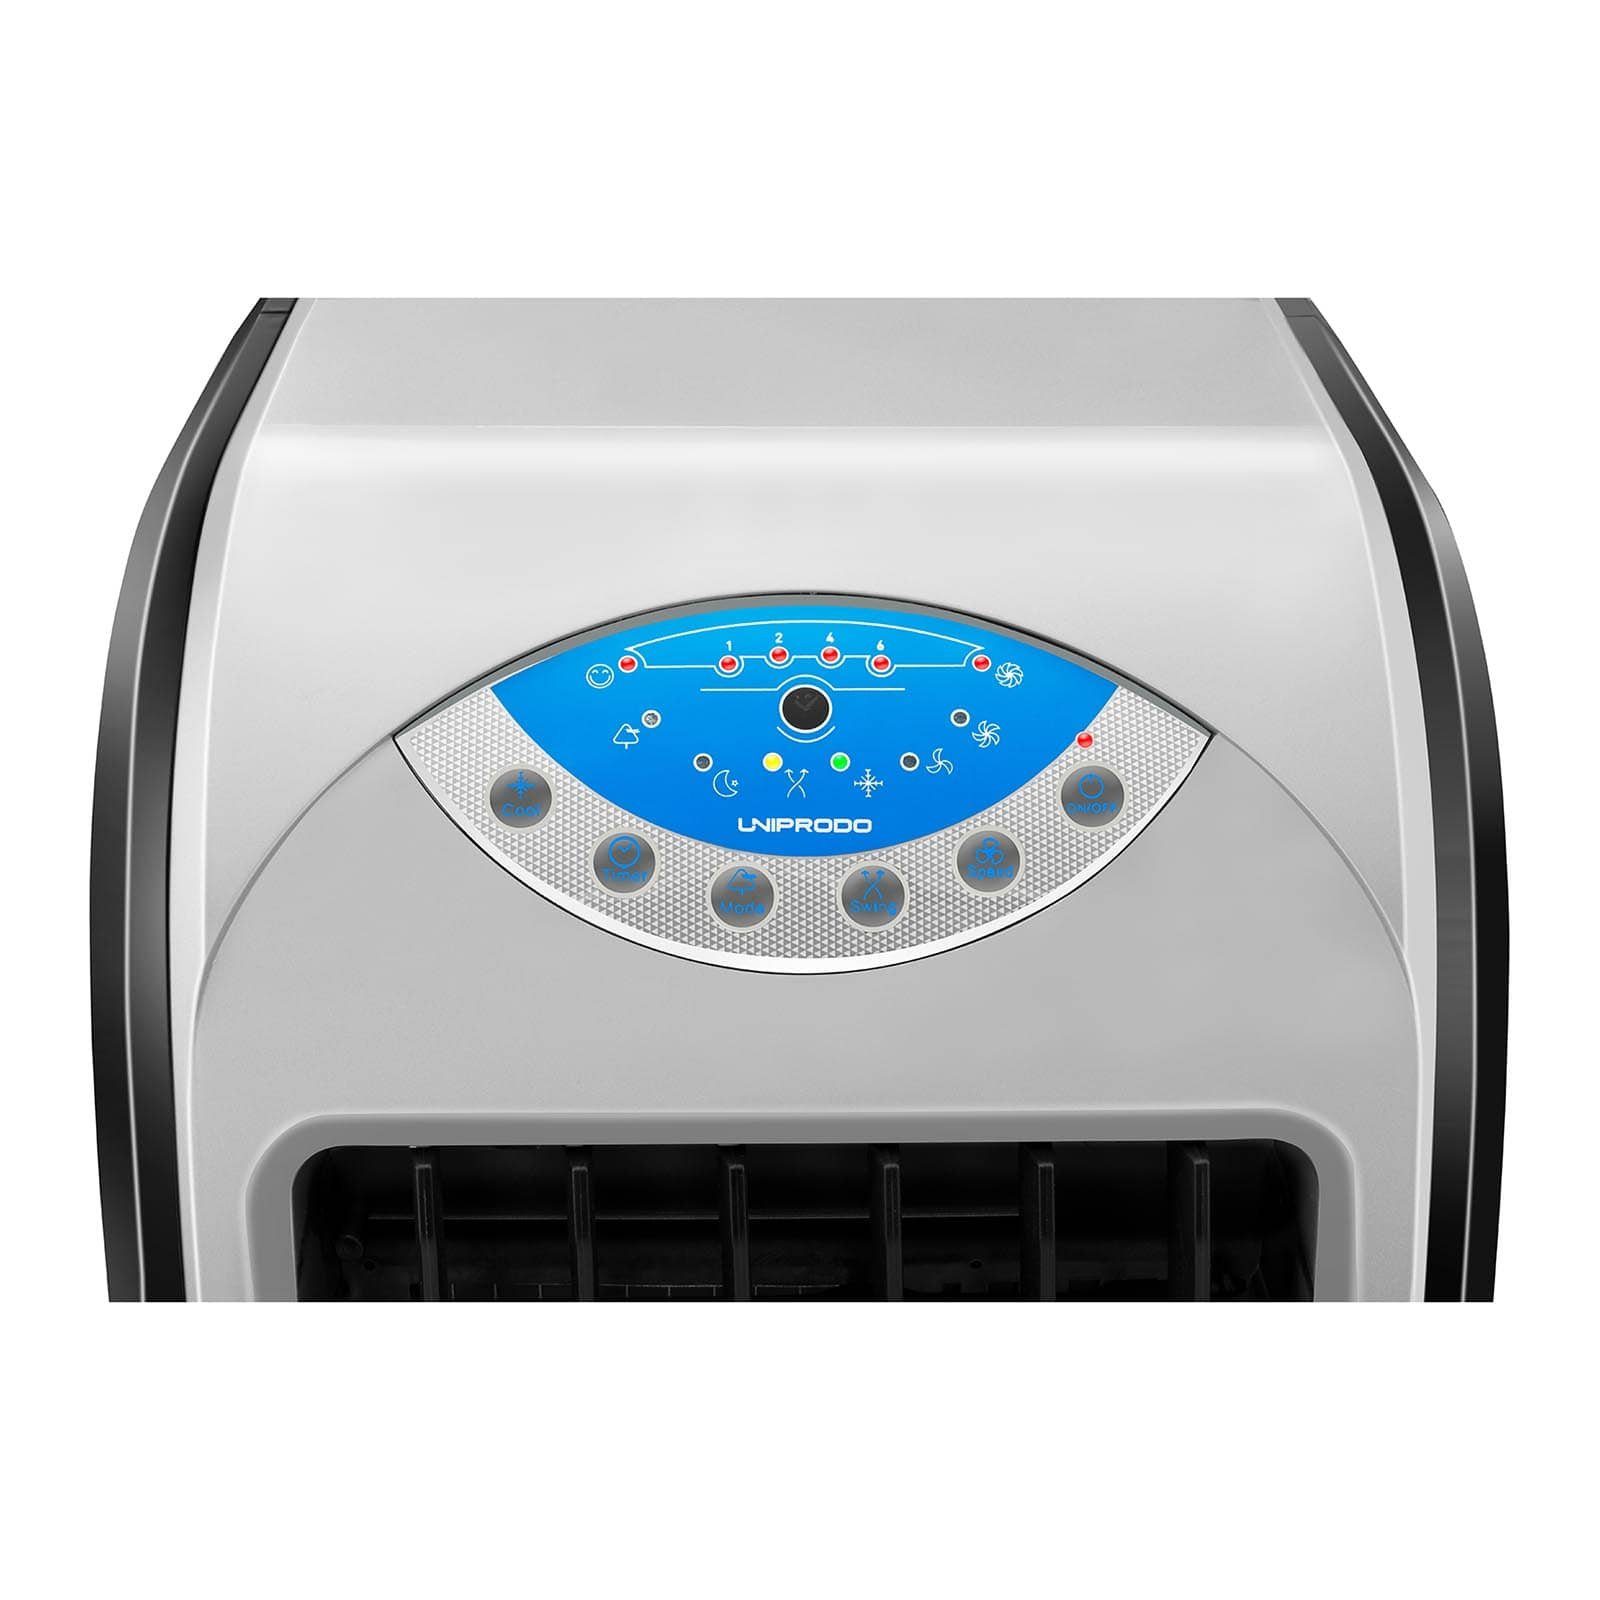 Uniprodo Ventilatorkombigerät Luftkühler mobil mit in - 4 Wassertank - 1 Heizfunktion 6 L